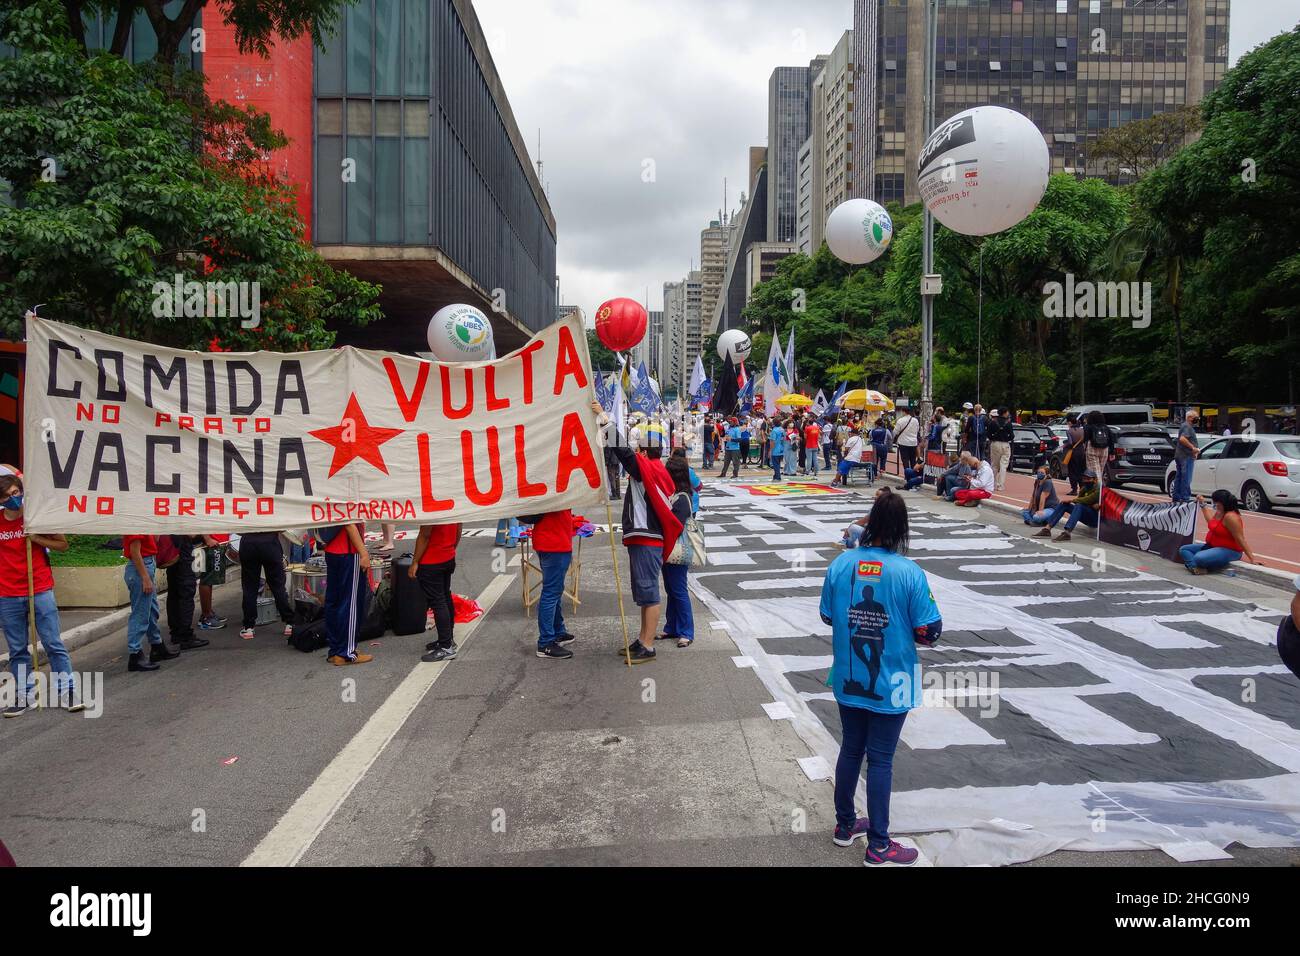 Volta Lula (come back Lula ) banner in rally against Brazilian president Bolsonaro Stock Photo